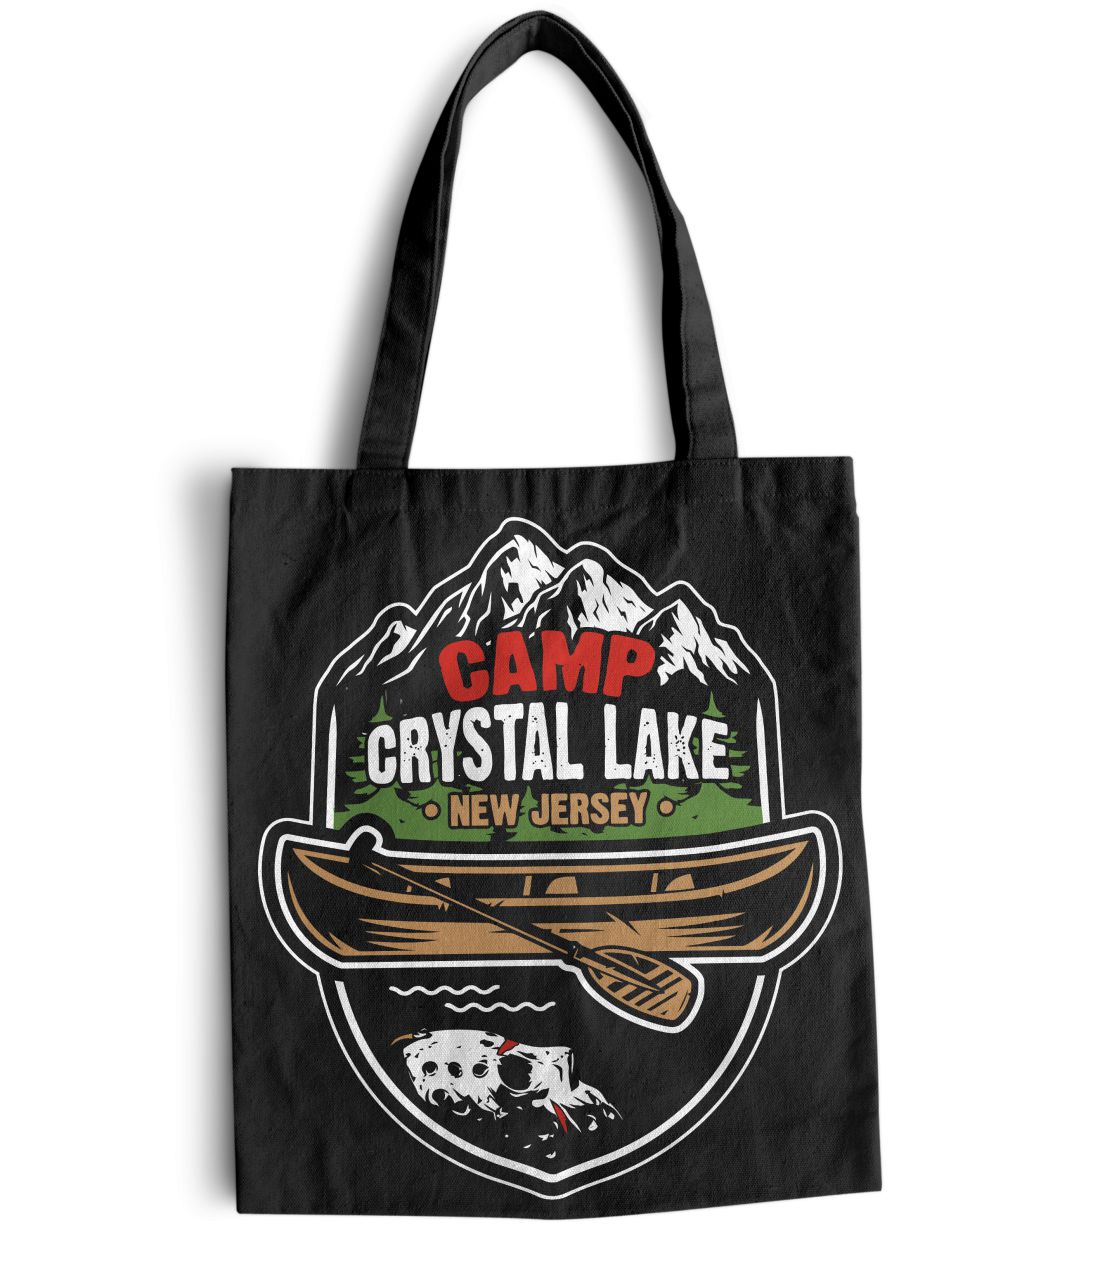 Camp Crystal Lake 005